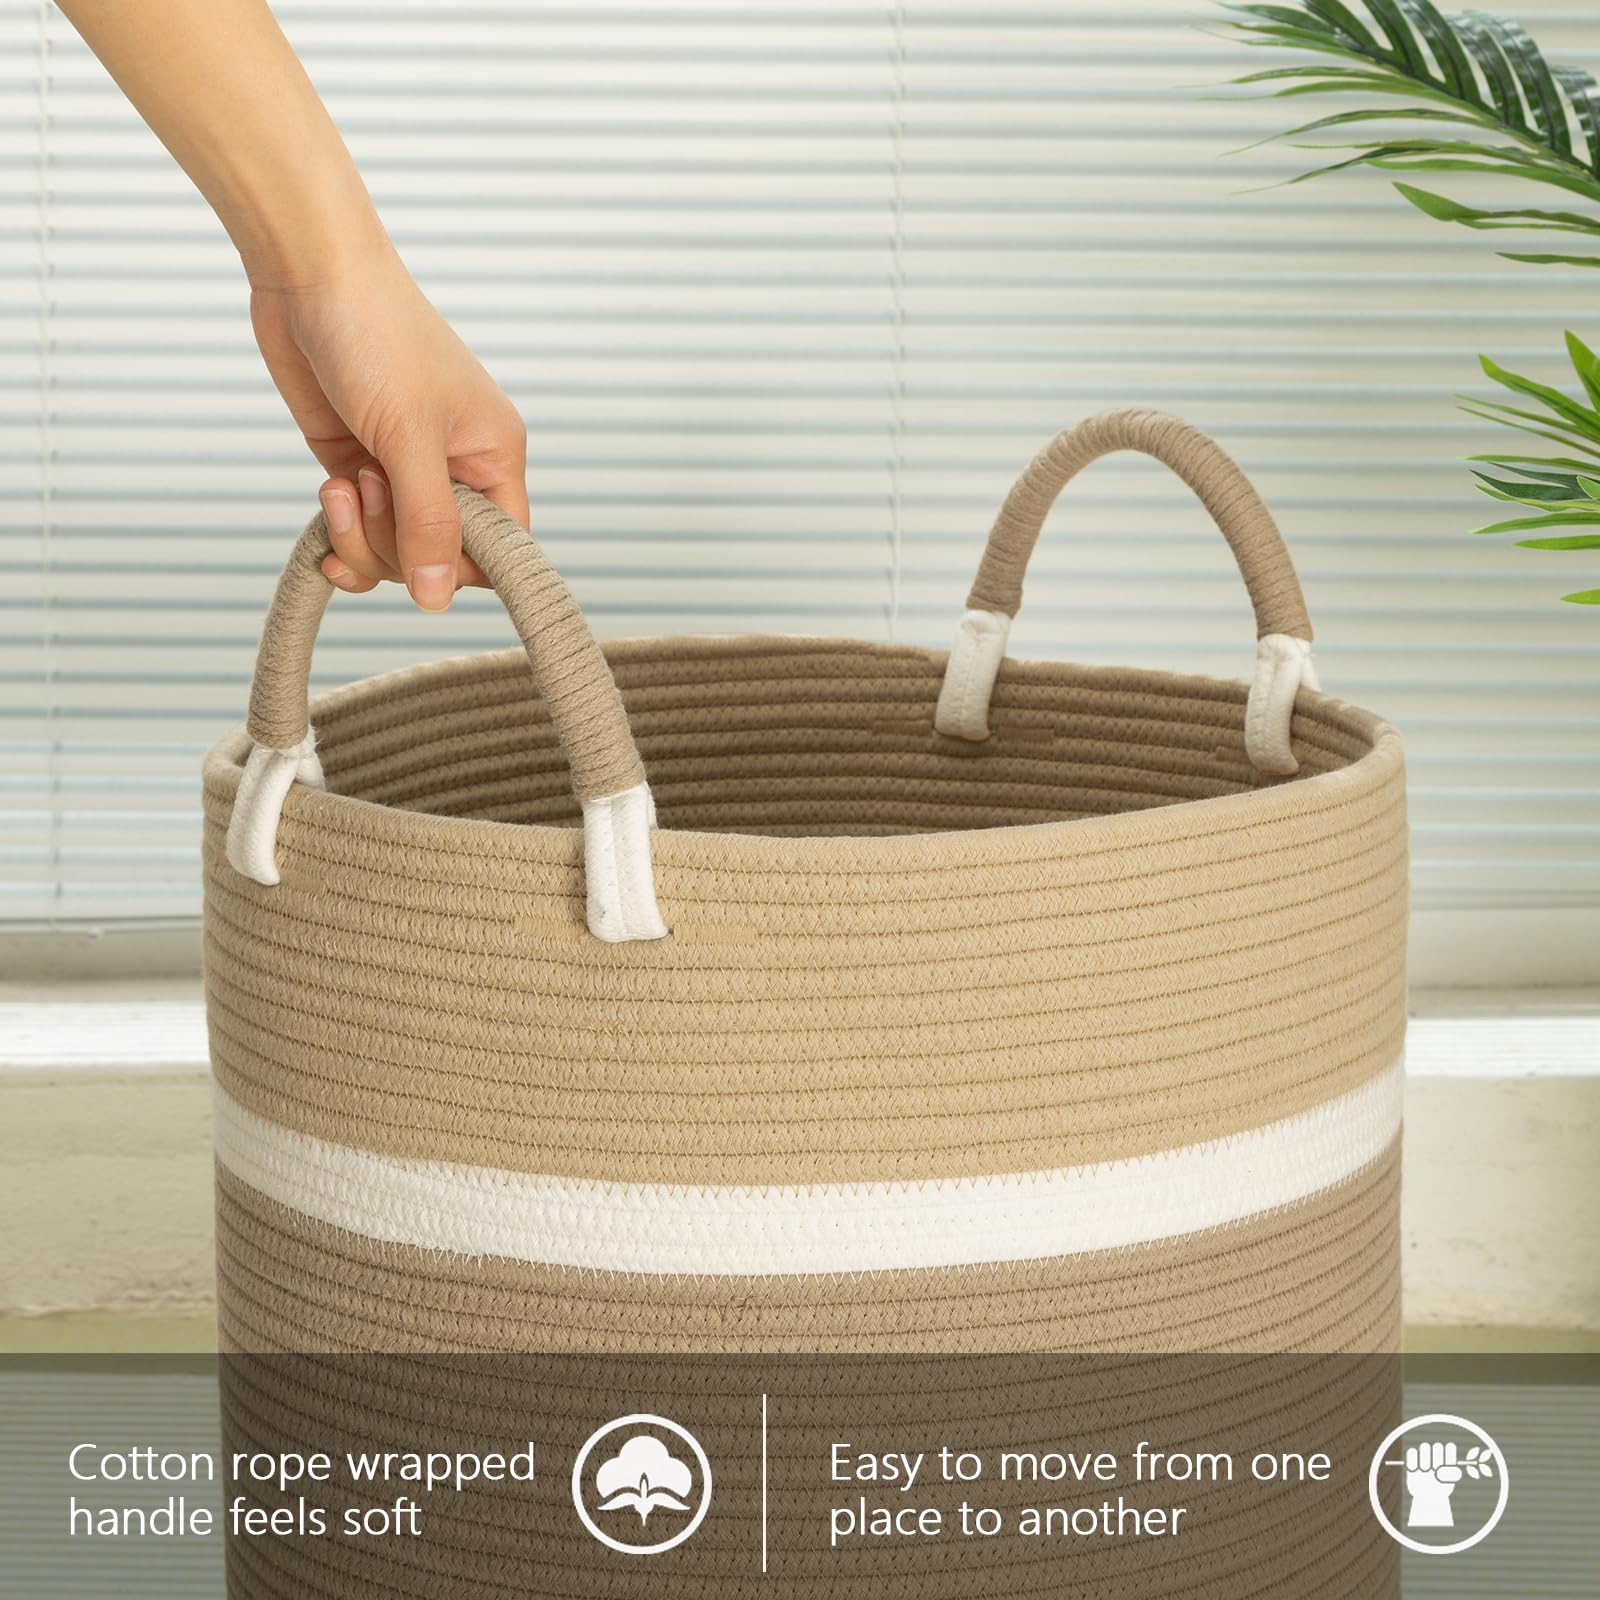 OIAHOMY Cotton Rope Basket 15.8" x 15.8" x 13.8"-Woven Blanket Basket, Baby Laundry Basket, Nursery Kids Toy Storage Organizer,Yellow & Yellow